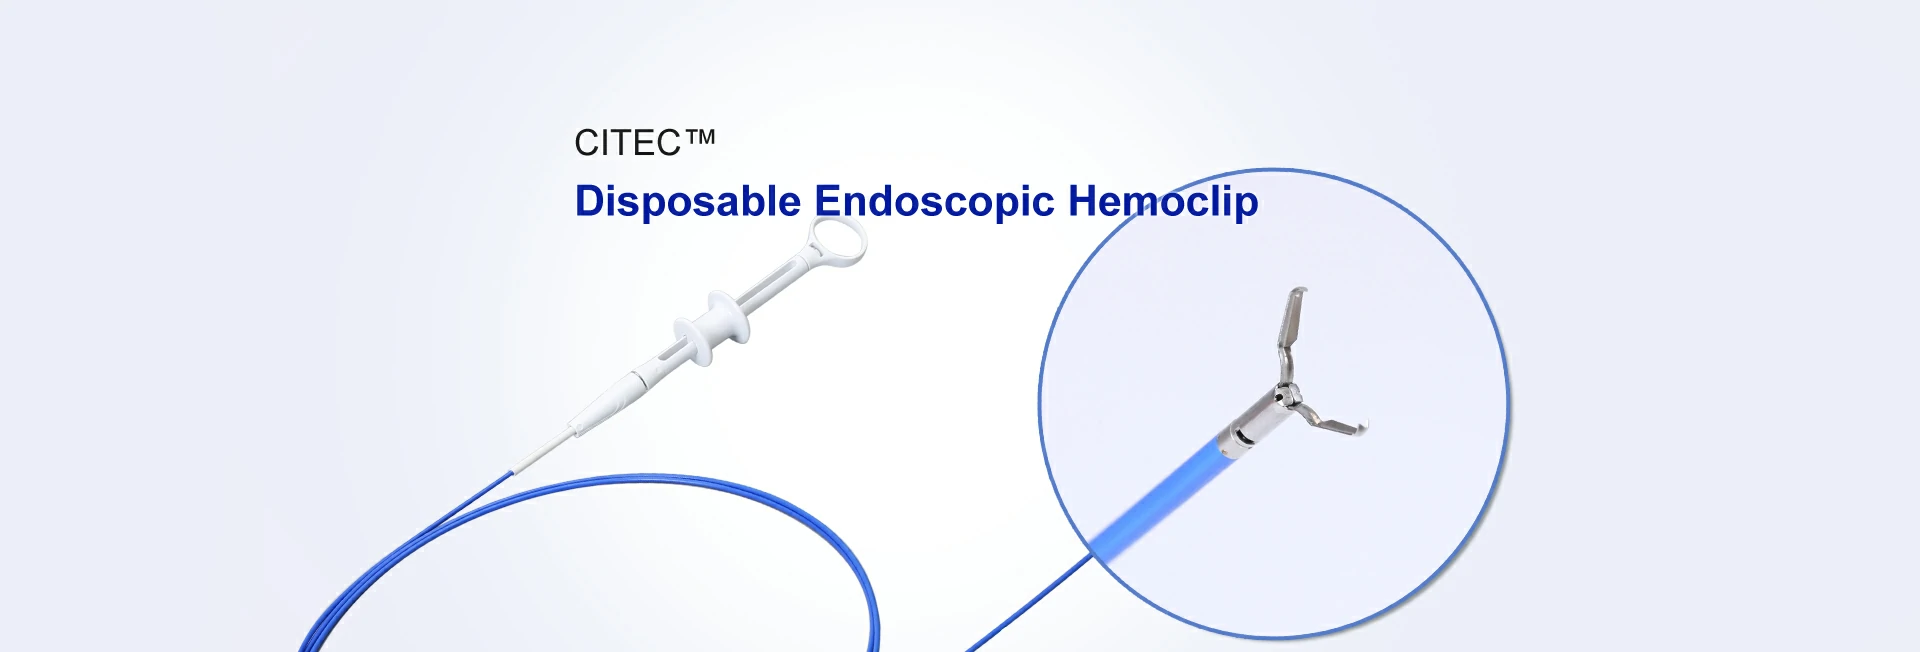 CITEC™ Disposable Endoscopic Hemoclip